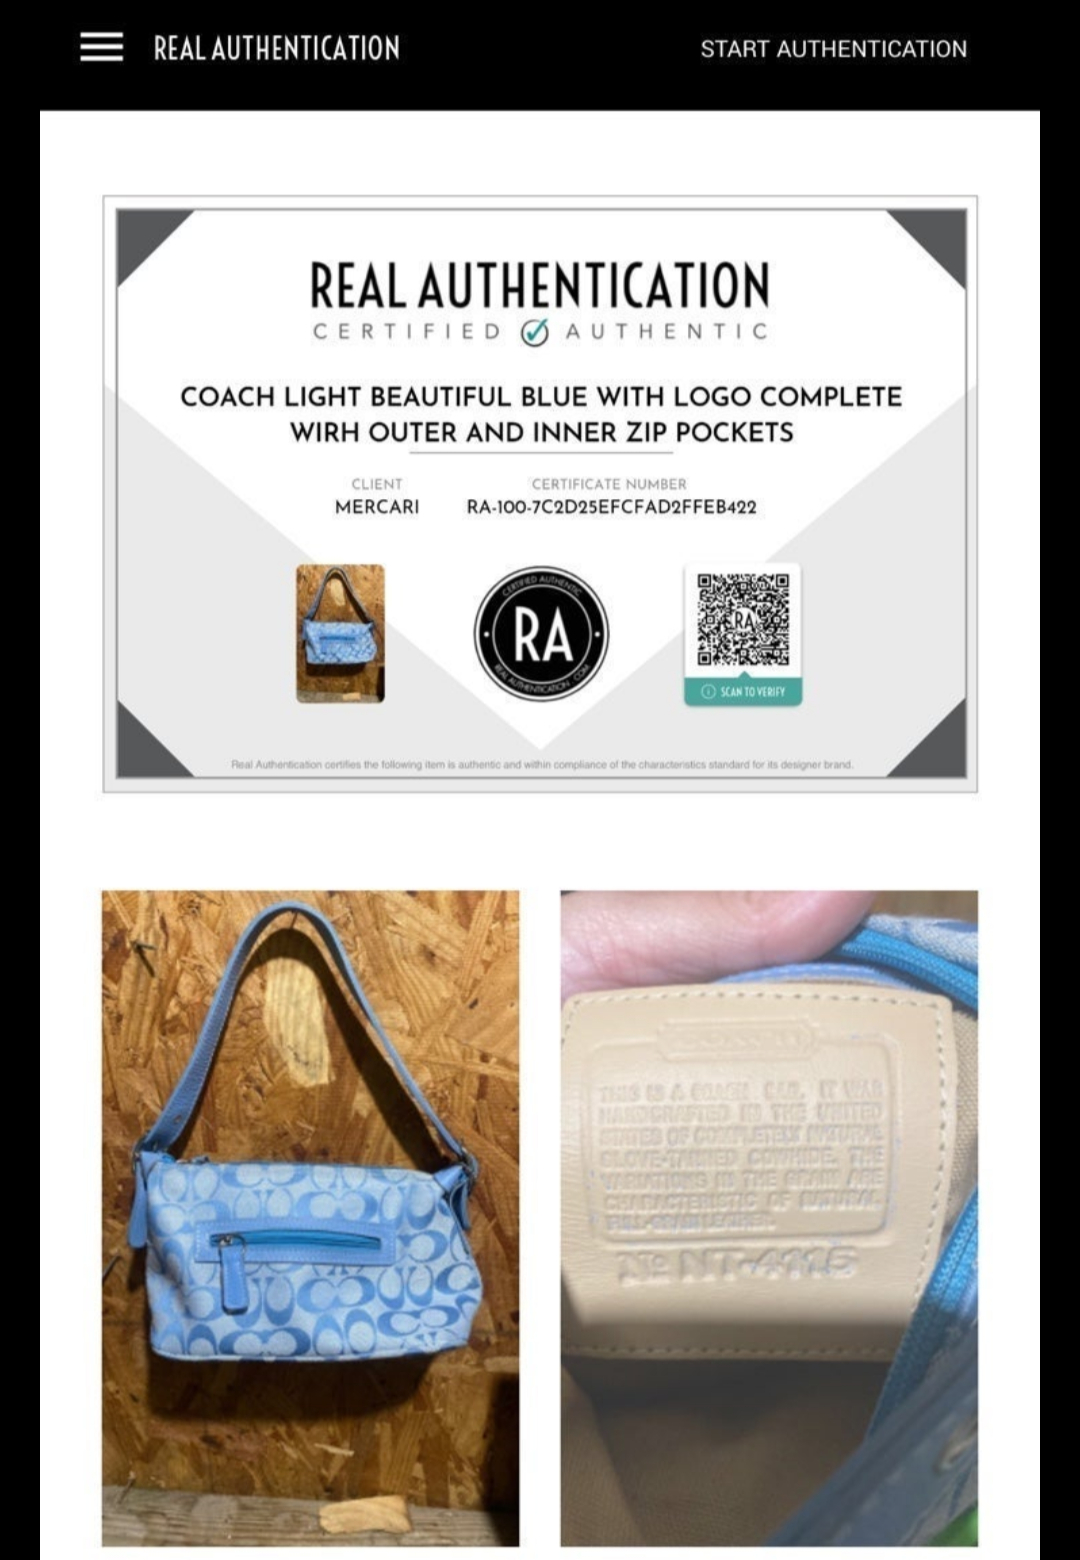 Fendi Baguette Authentication: Real Vs Fake Guide